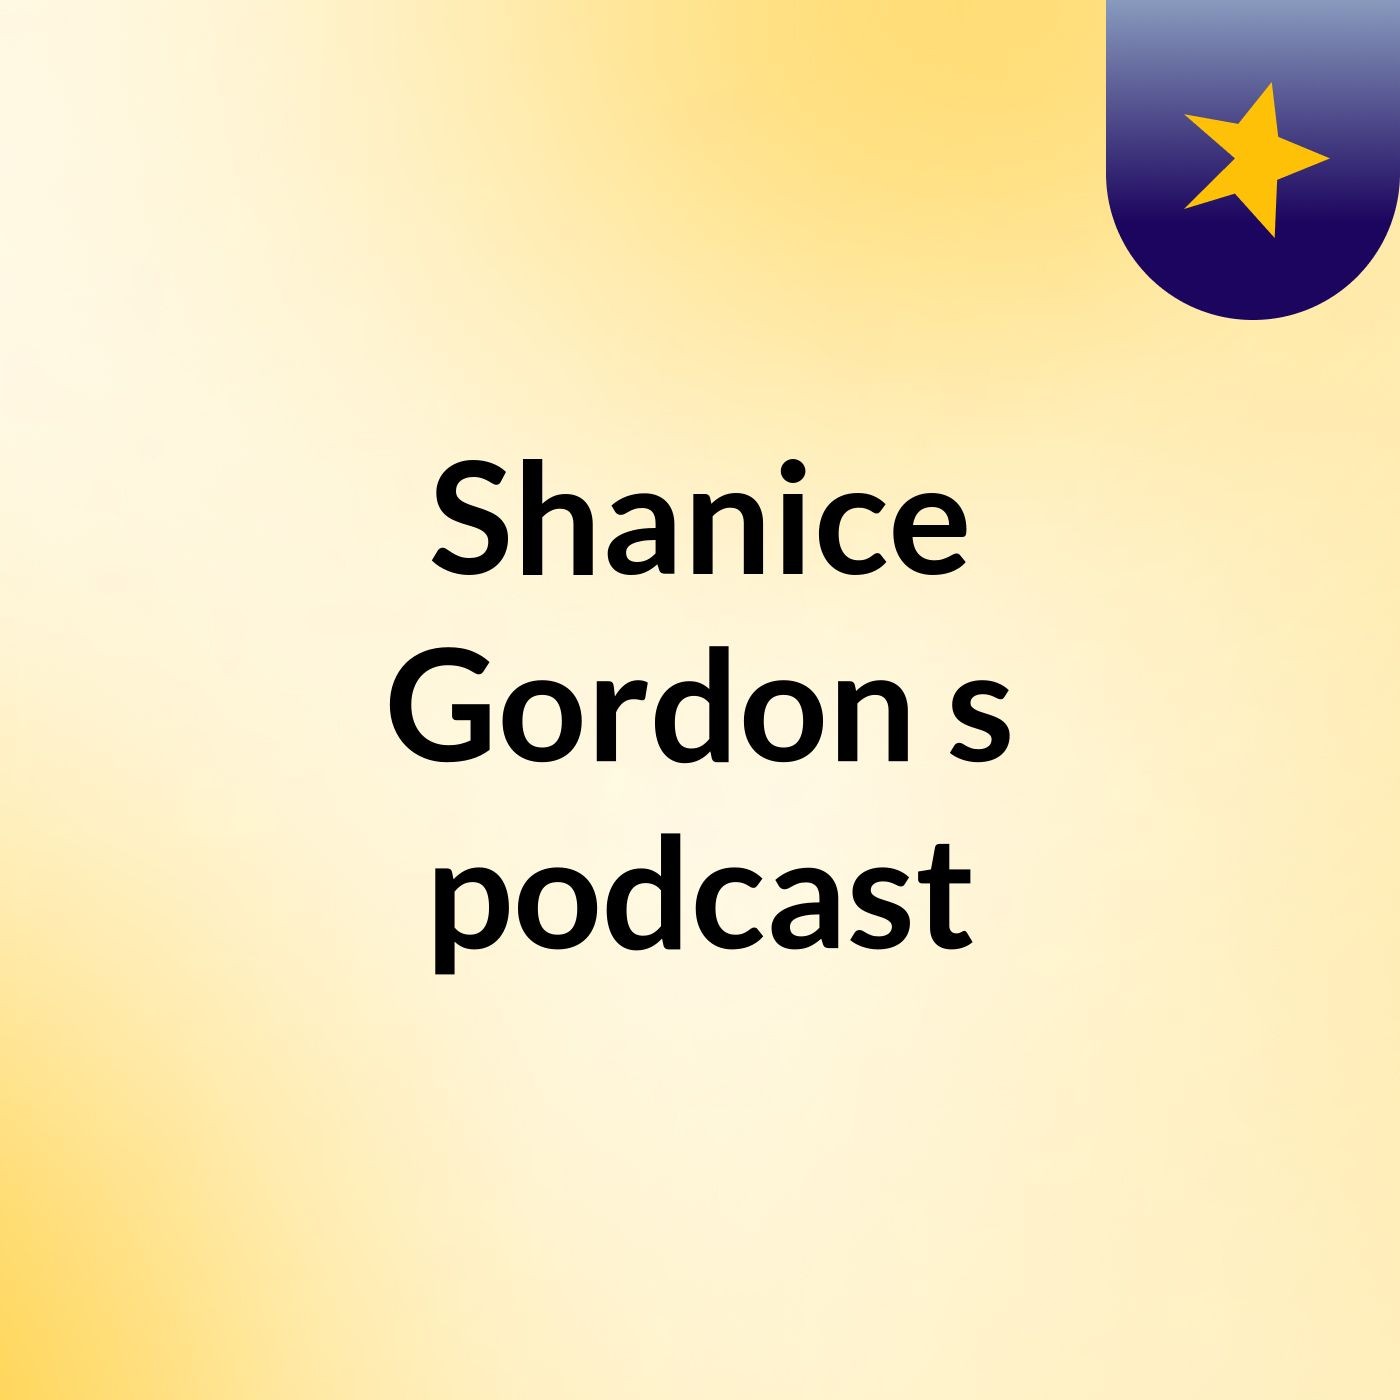 Shanice Gordon's podcast